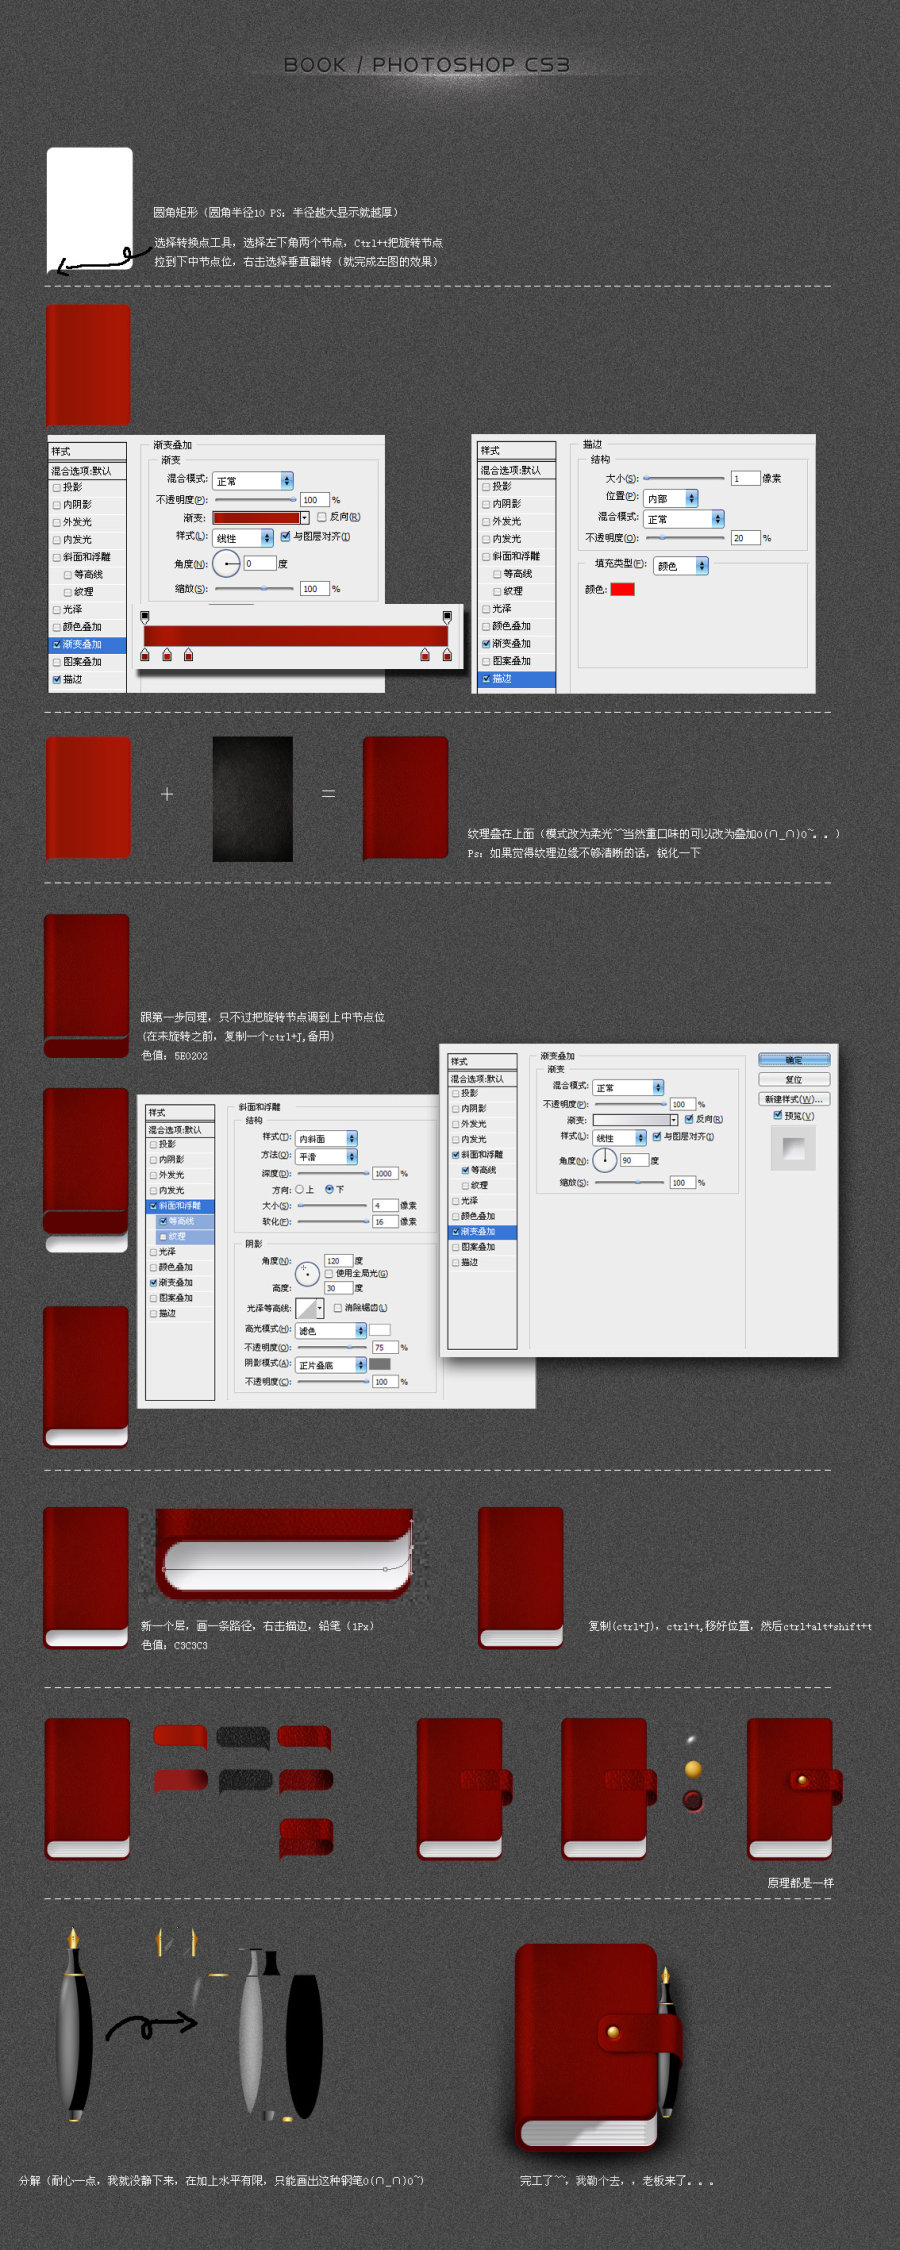 Photoshop绘制夹着钢笔的红色记事本图标教程